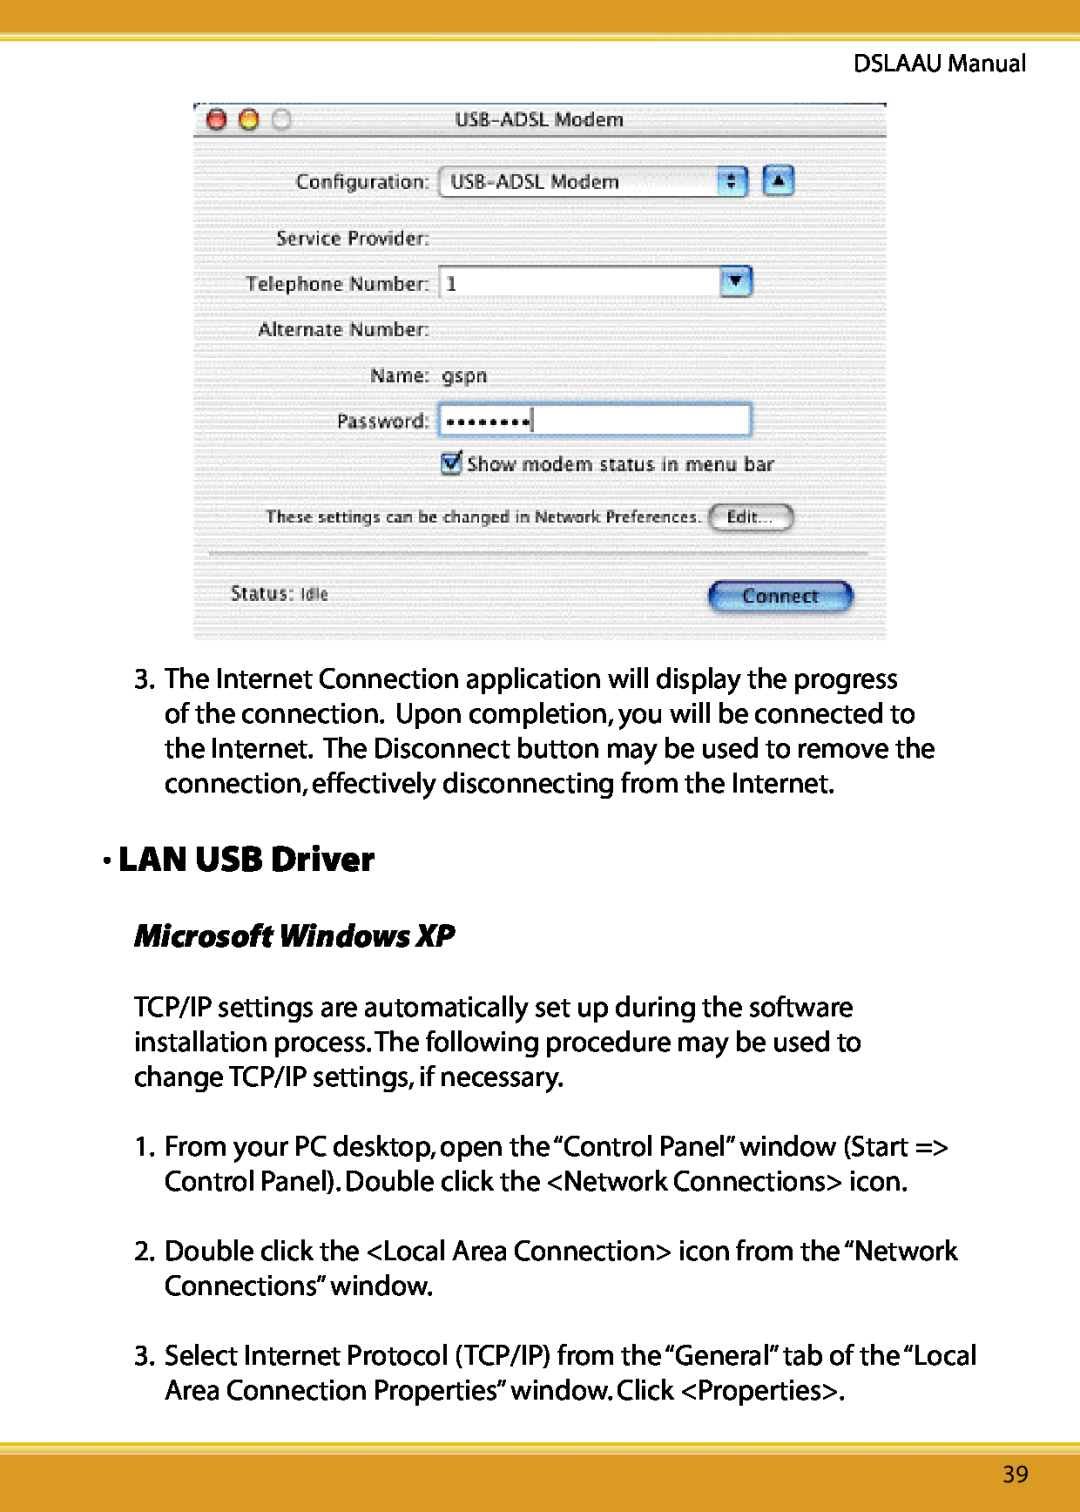 Corega DSLAAU user manual LAN USB Driver, Microsoft Windows XP 